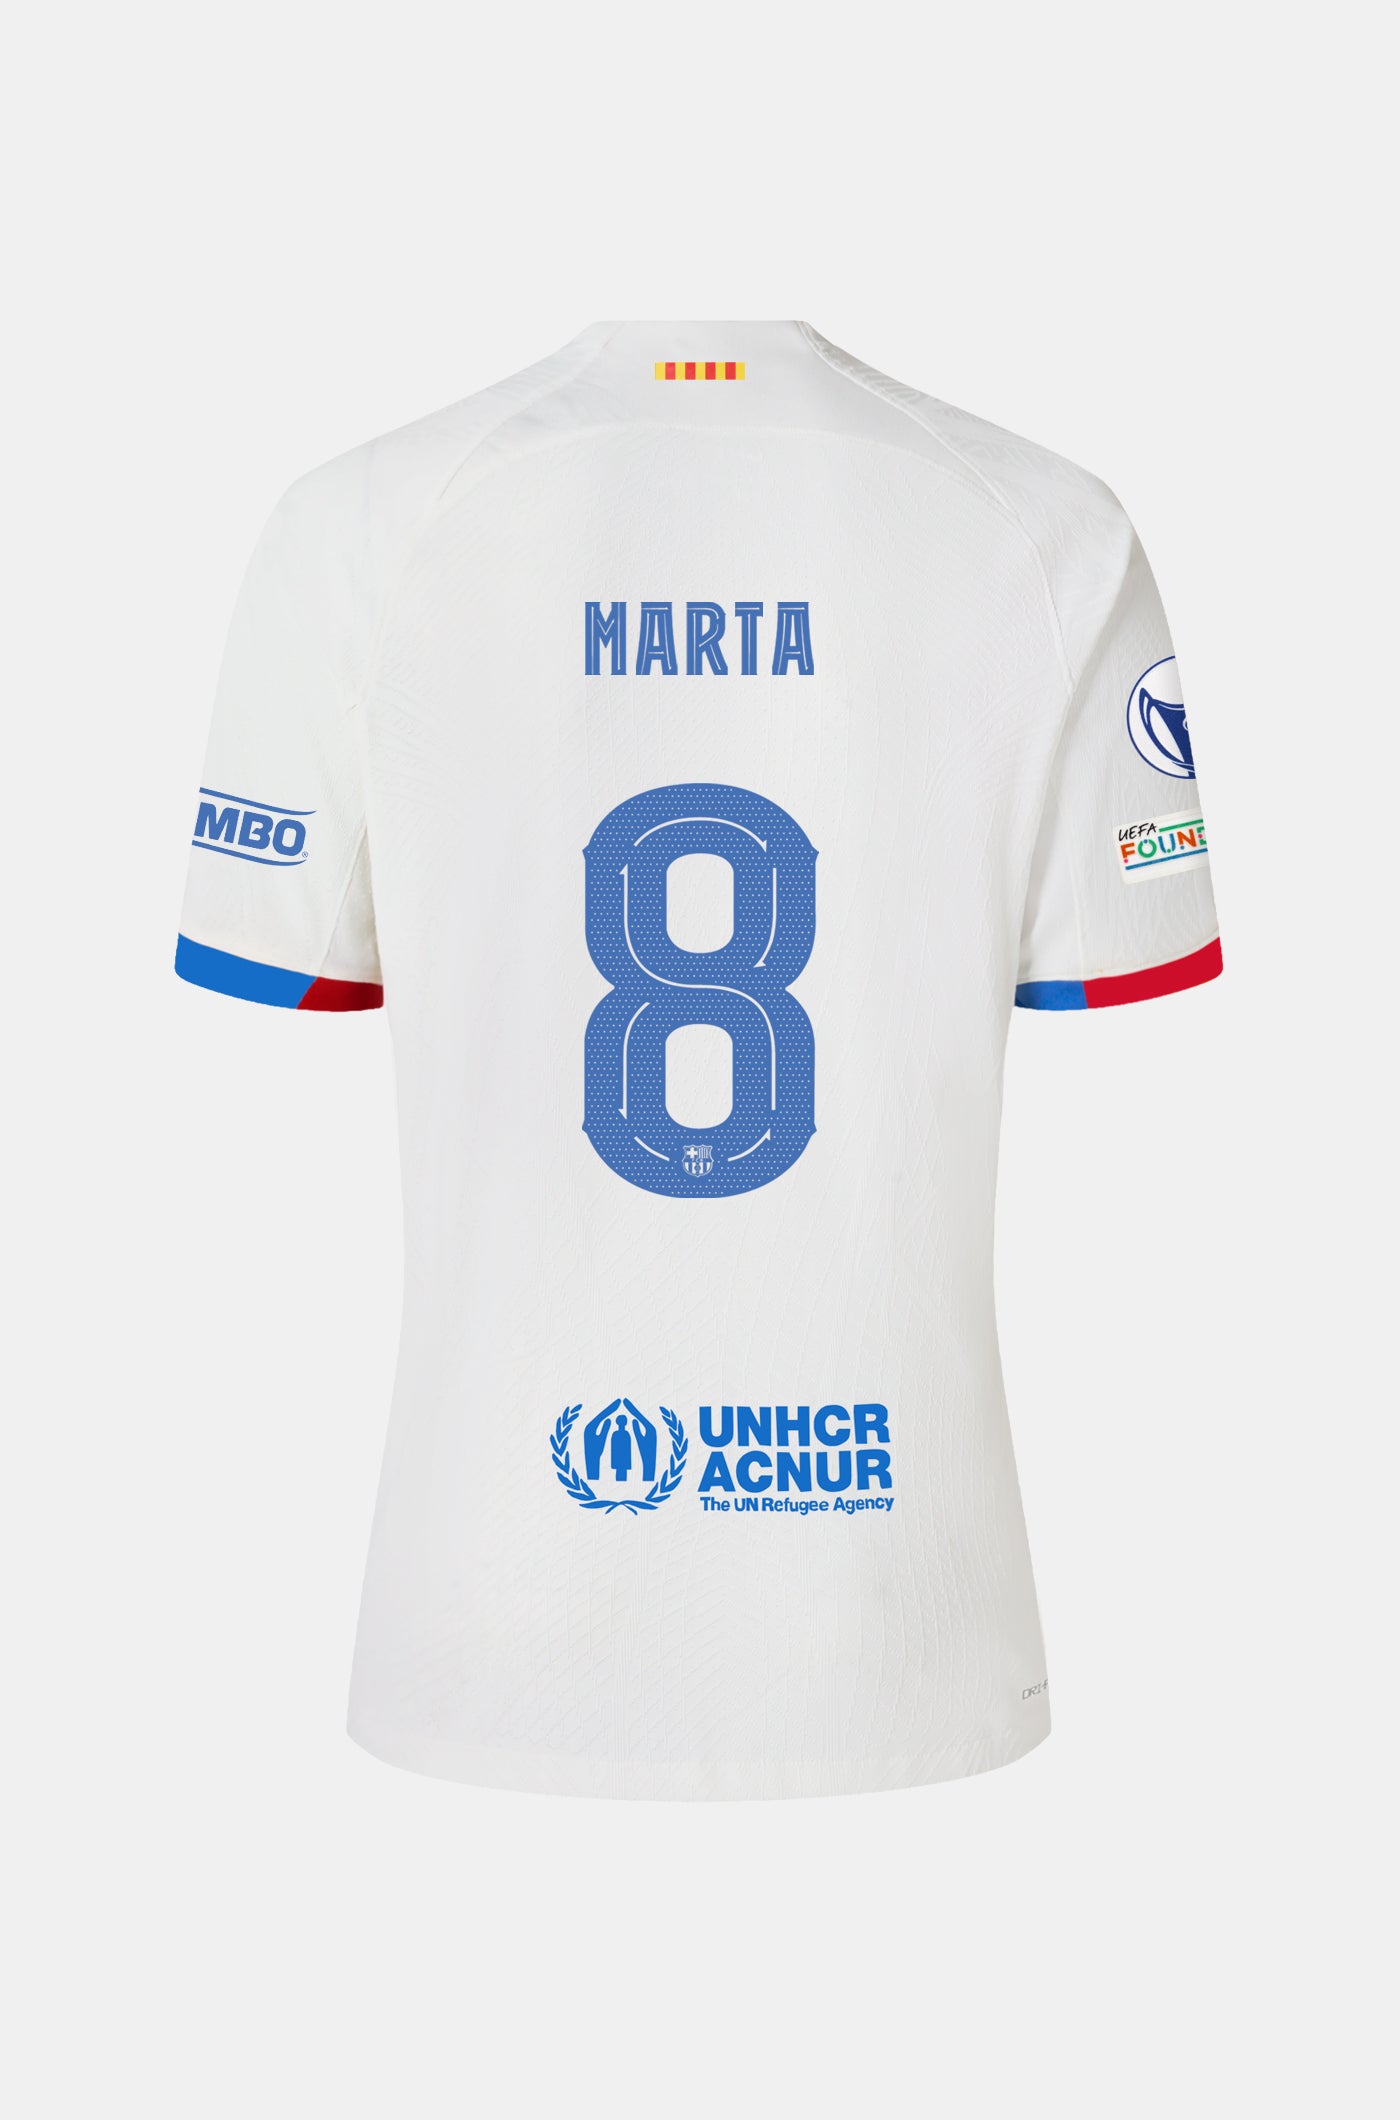 UWCL FC Barcelona away shirt 23/24 Player's Edition - MARTA